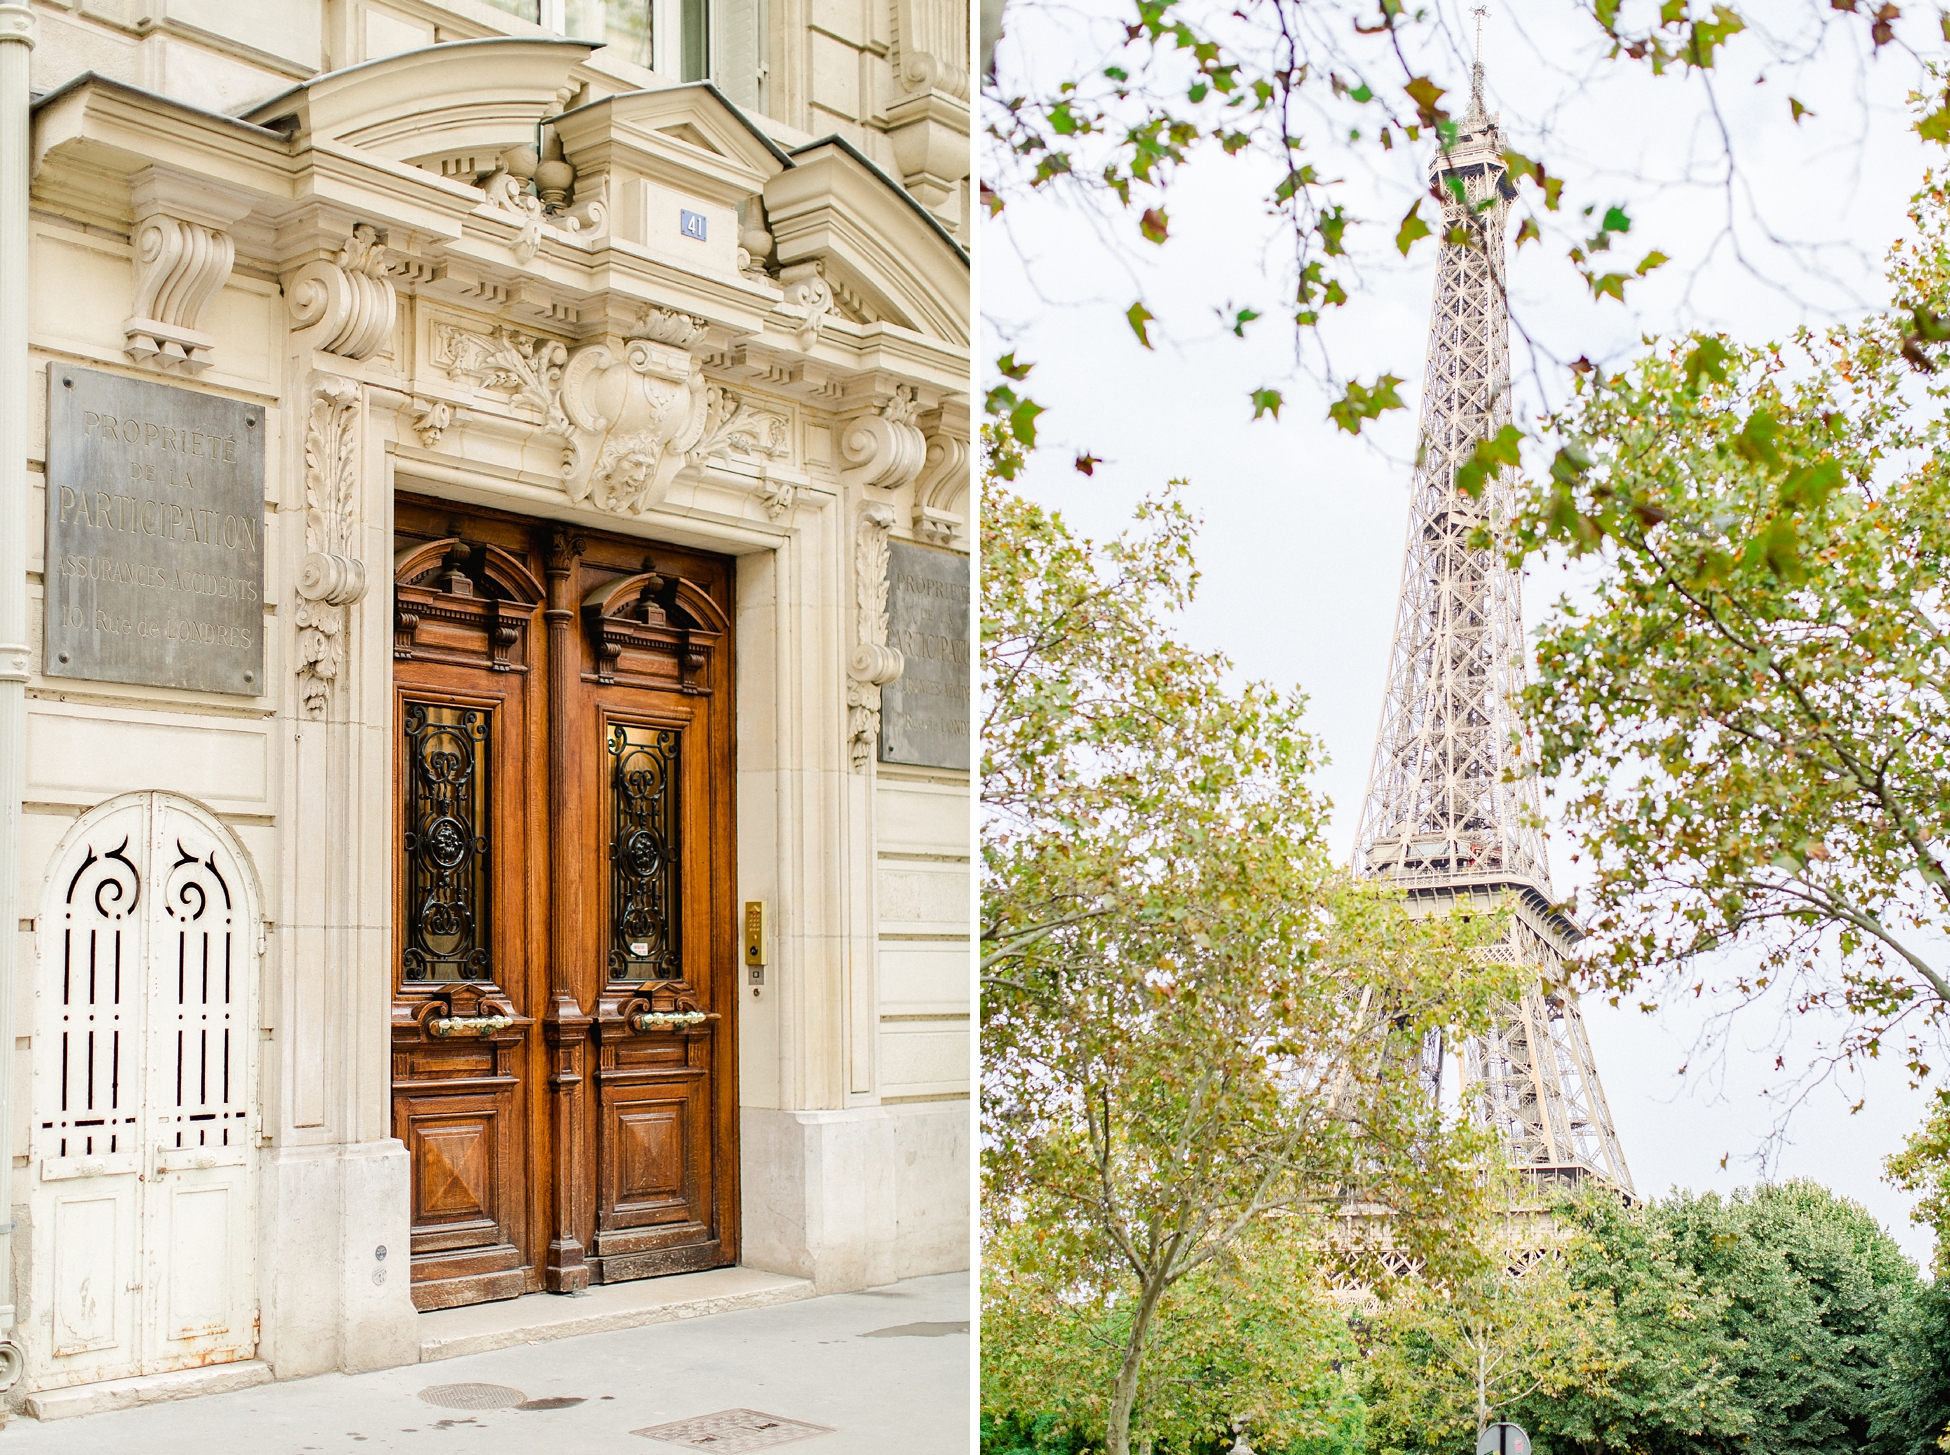 Our Paris Adventure | © Ailyn LaTorre Photography 2018